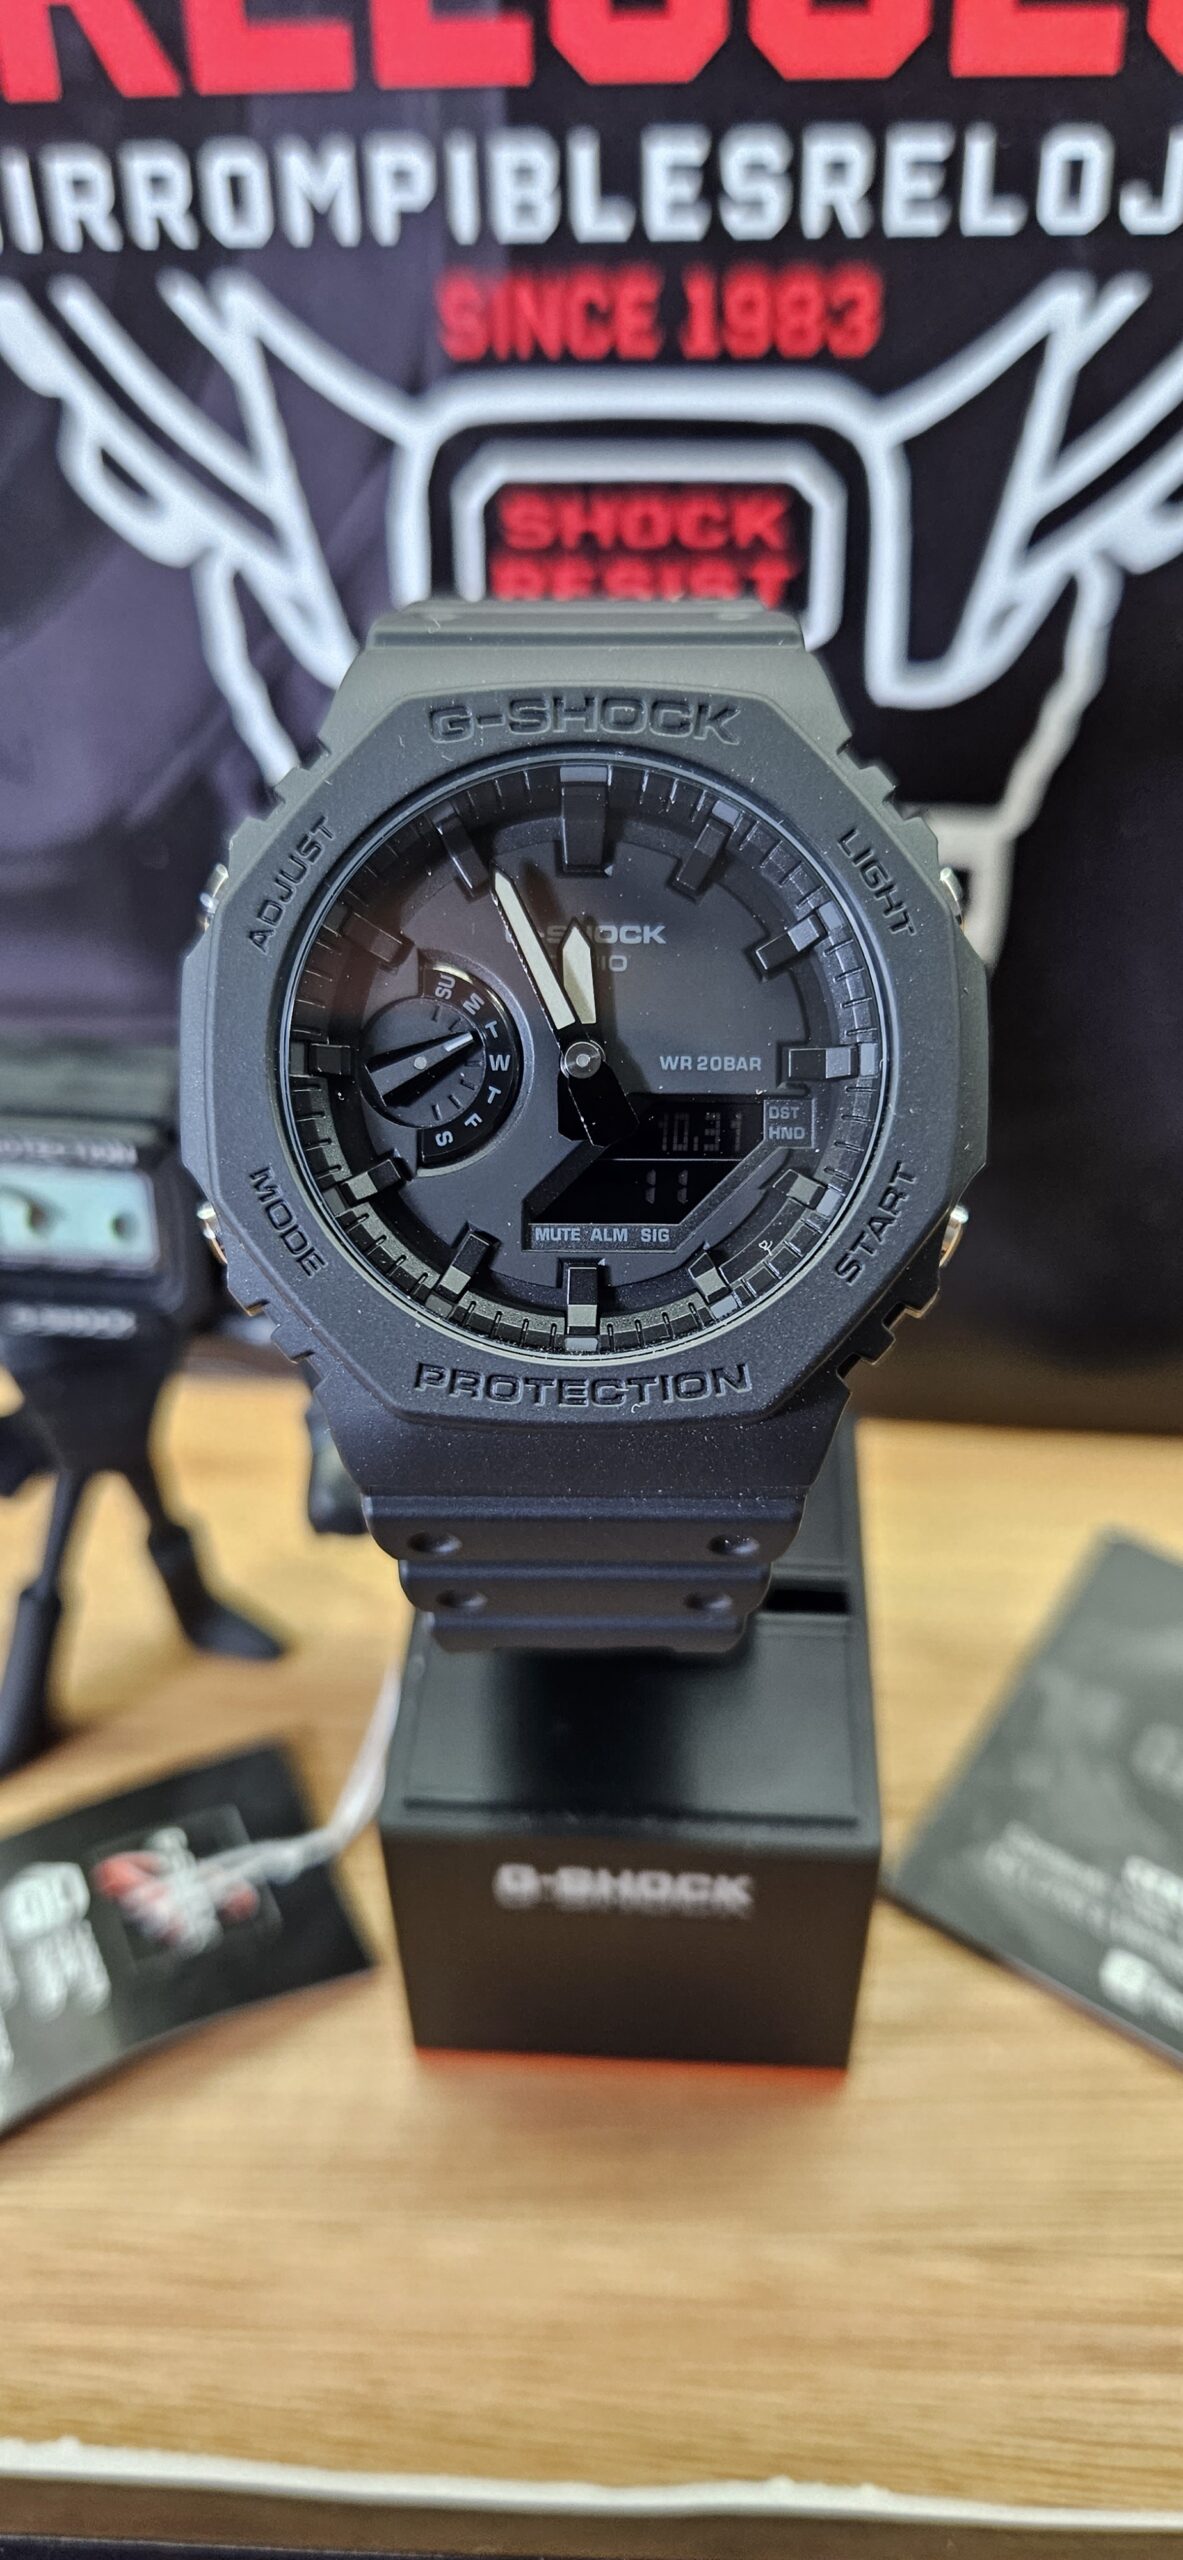 G-SHOCK GA-2100 1A1 – Irrompibles Relojes